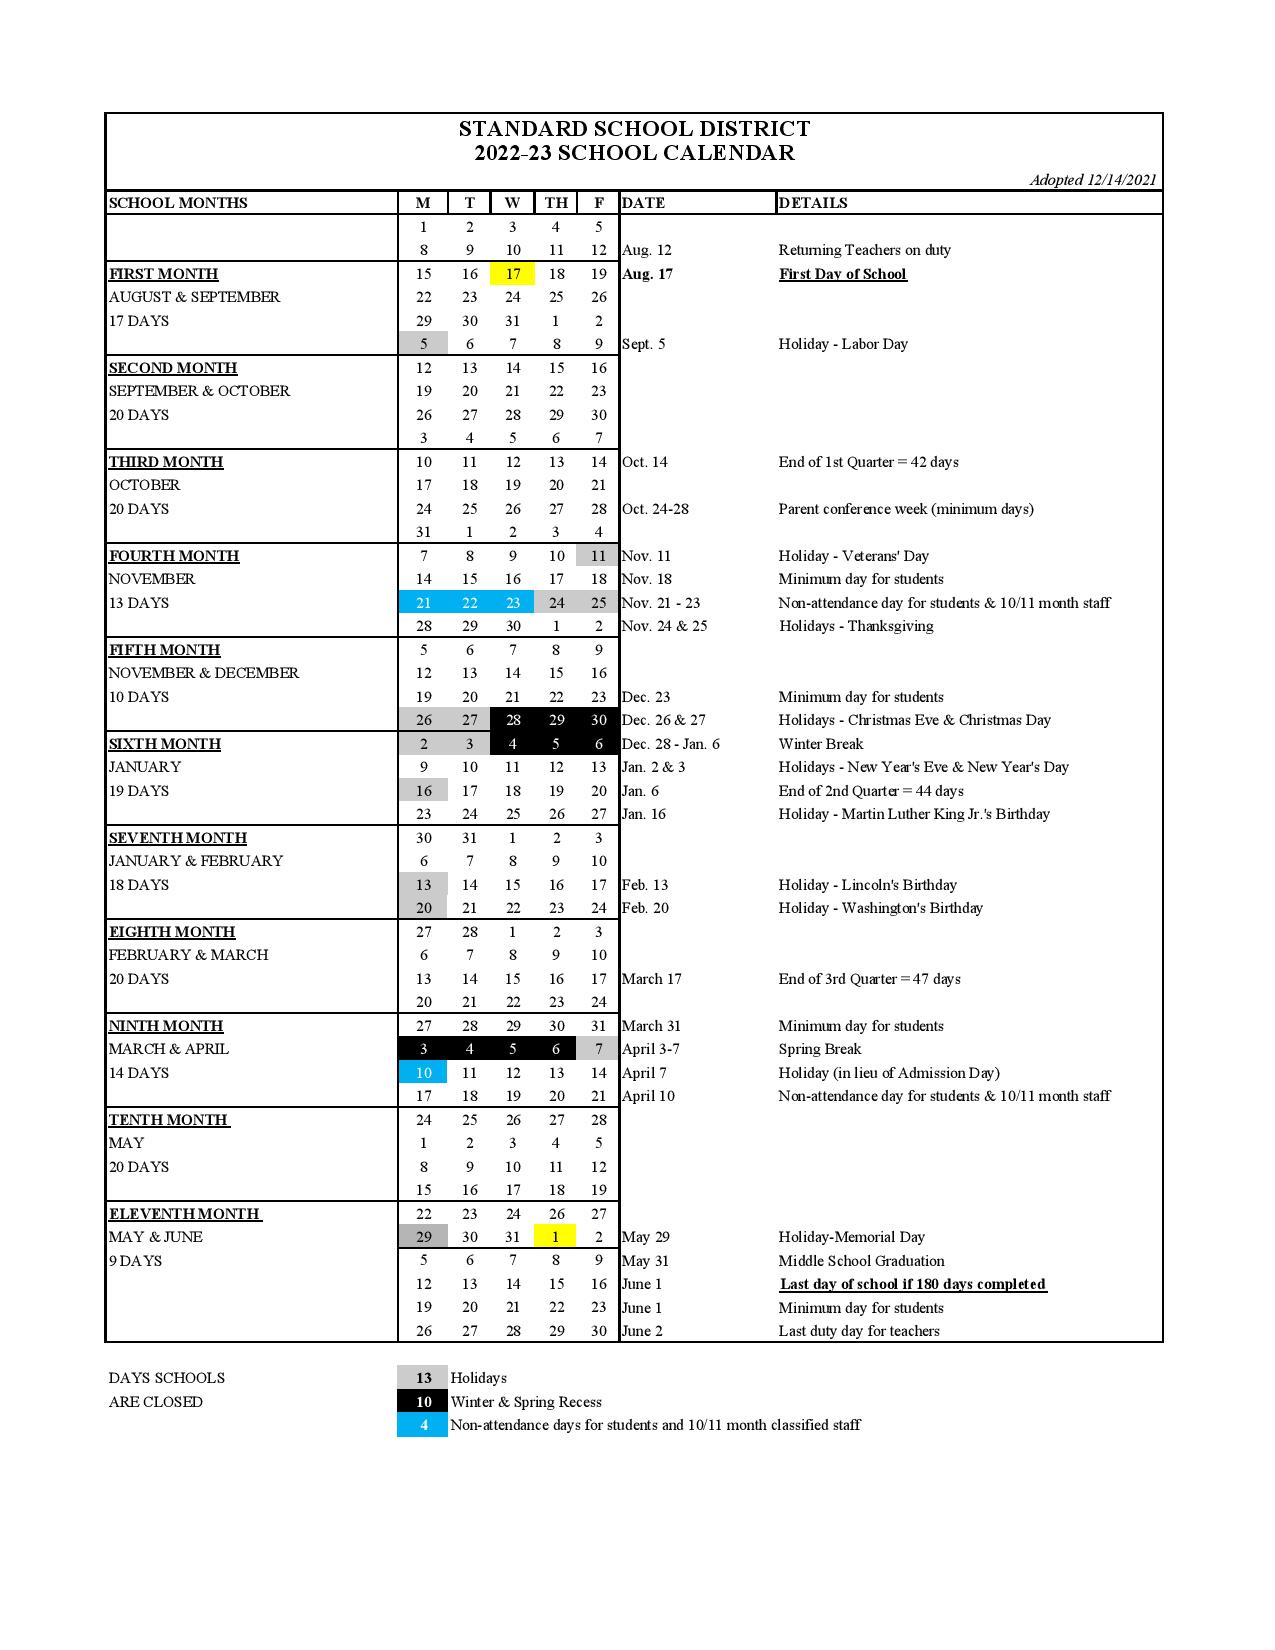 standard-elementary-school-district-calendar-2022-2023